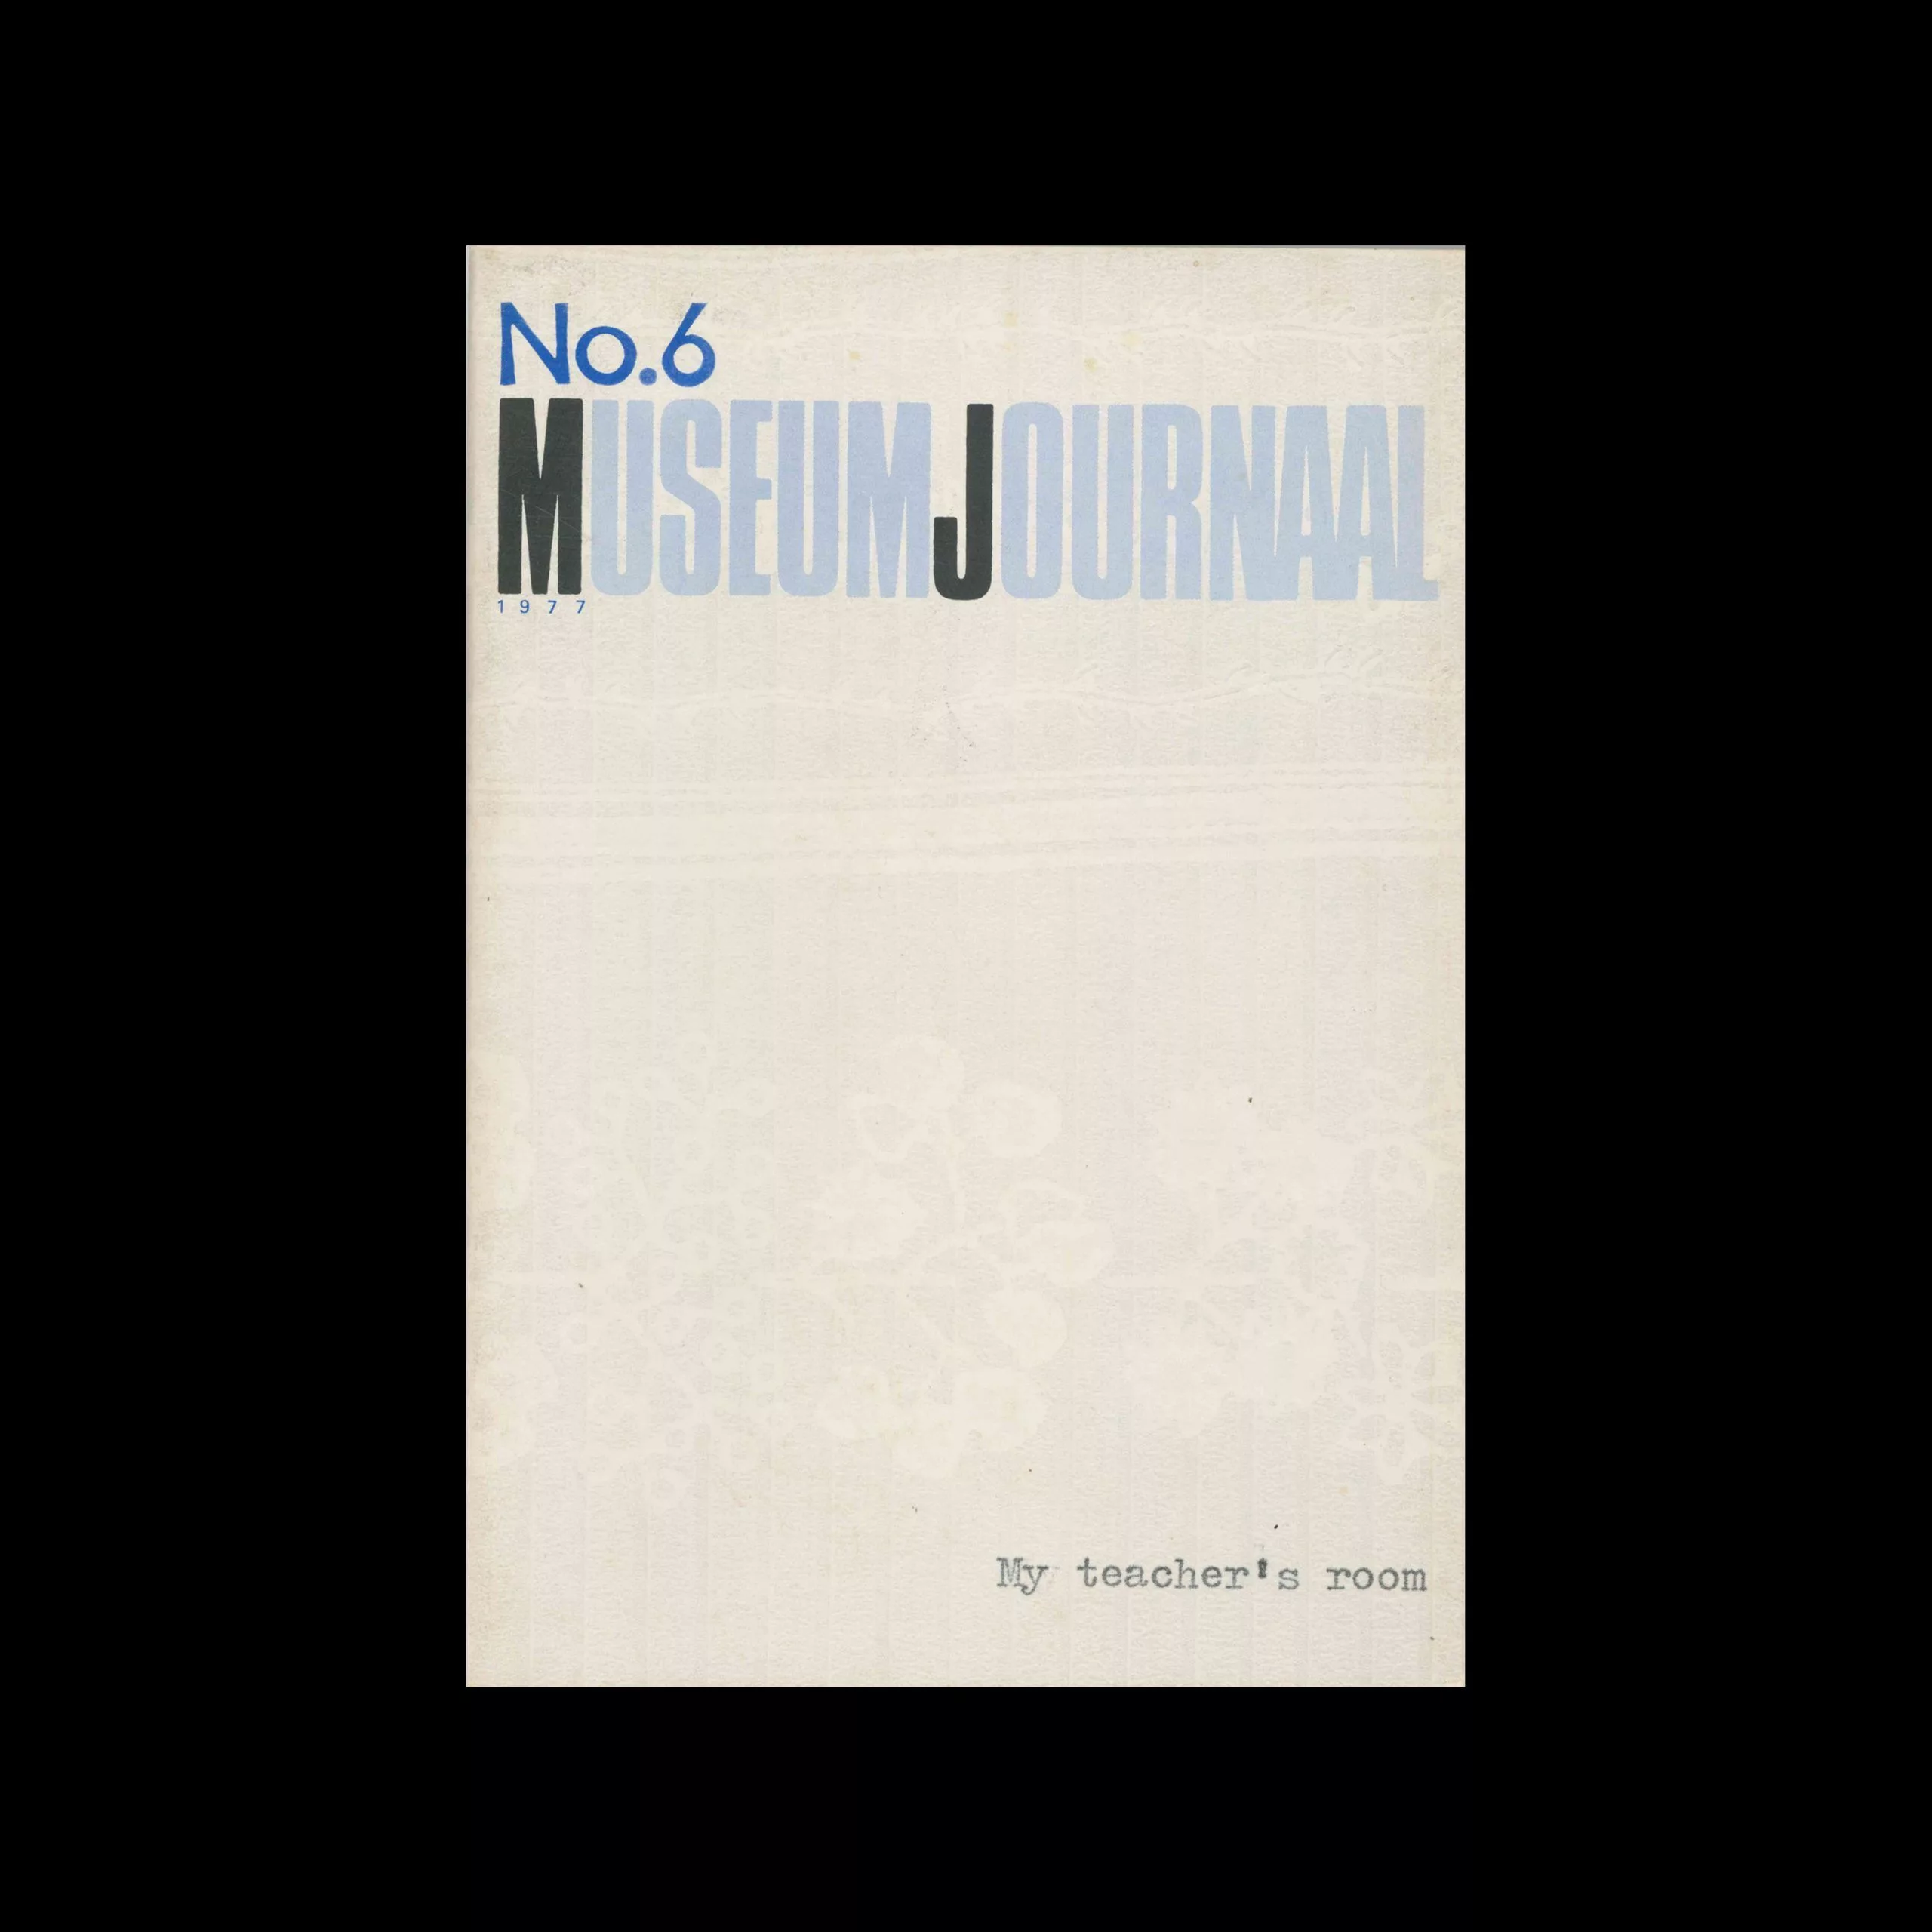 Museumjournaal, Serie 22 no6, 1977. Layout: Frans Evenhuis and Piet van Meiji | Cover: Swip Stolk